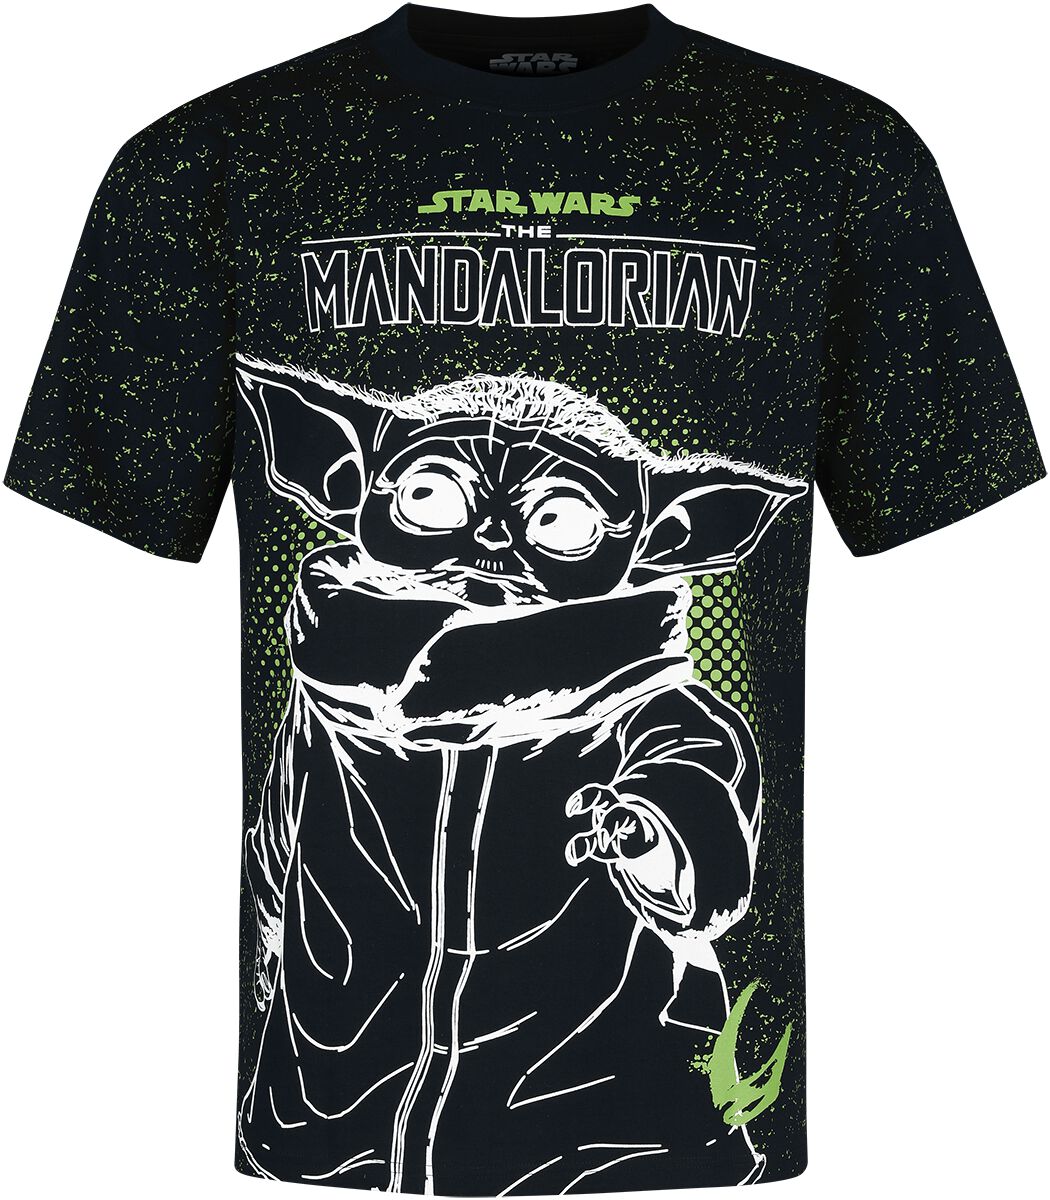 Star Wars The Mandalorian - Grogu T-Shirt multicolor in L